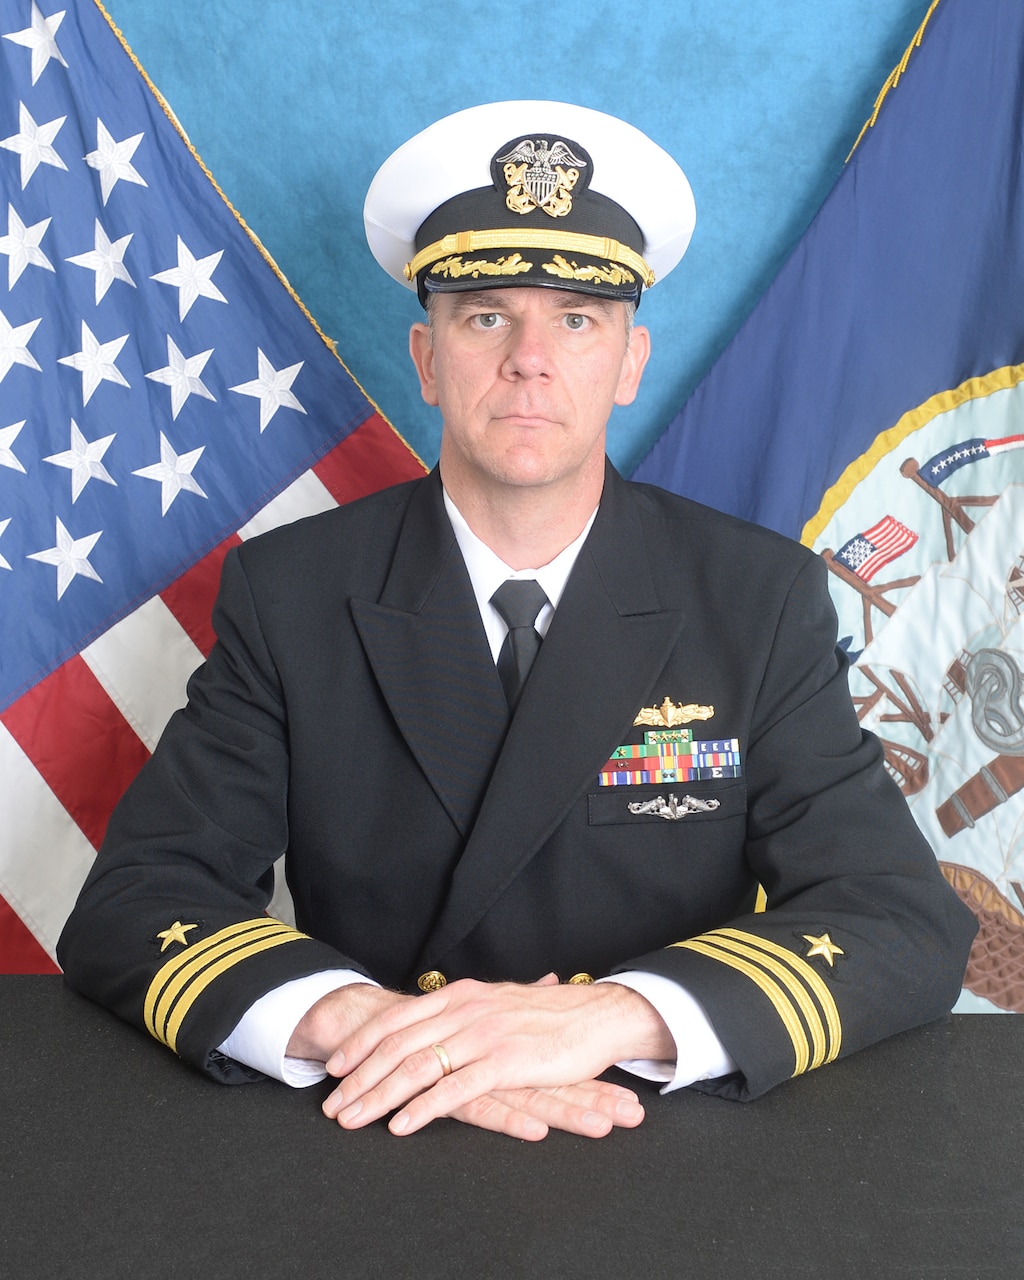 Commander Kyle A. Moyer